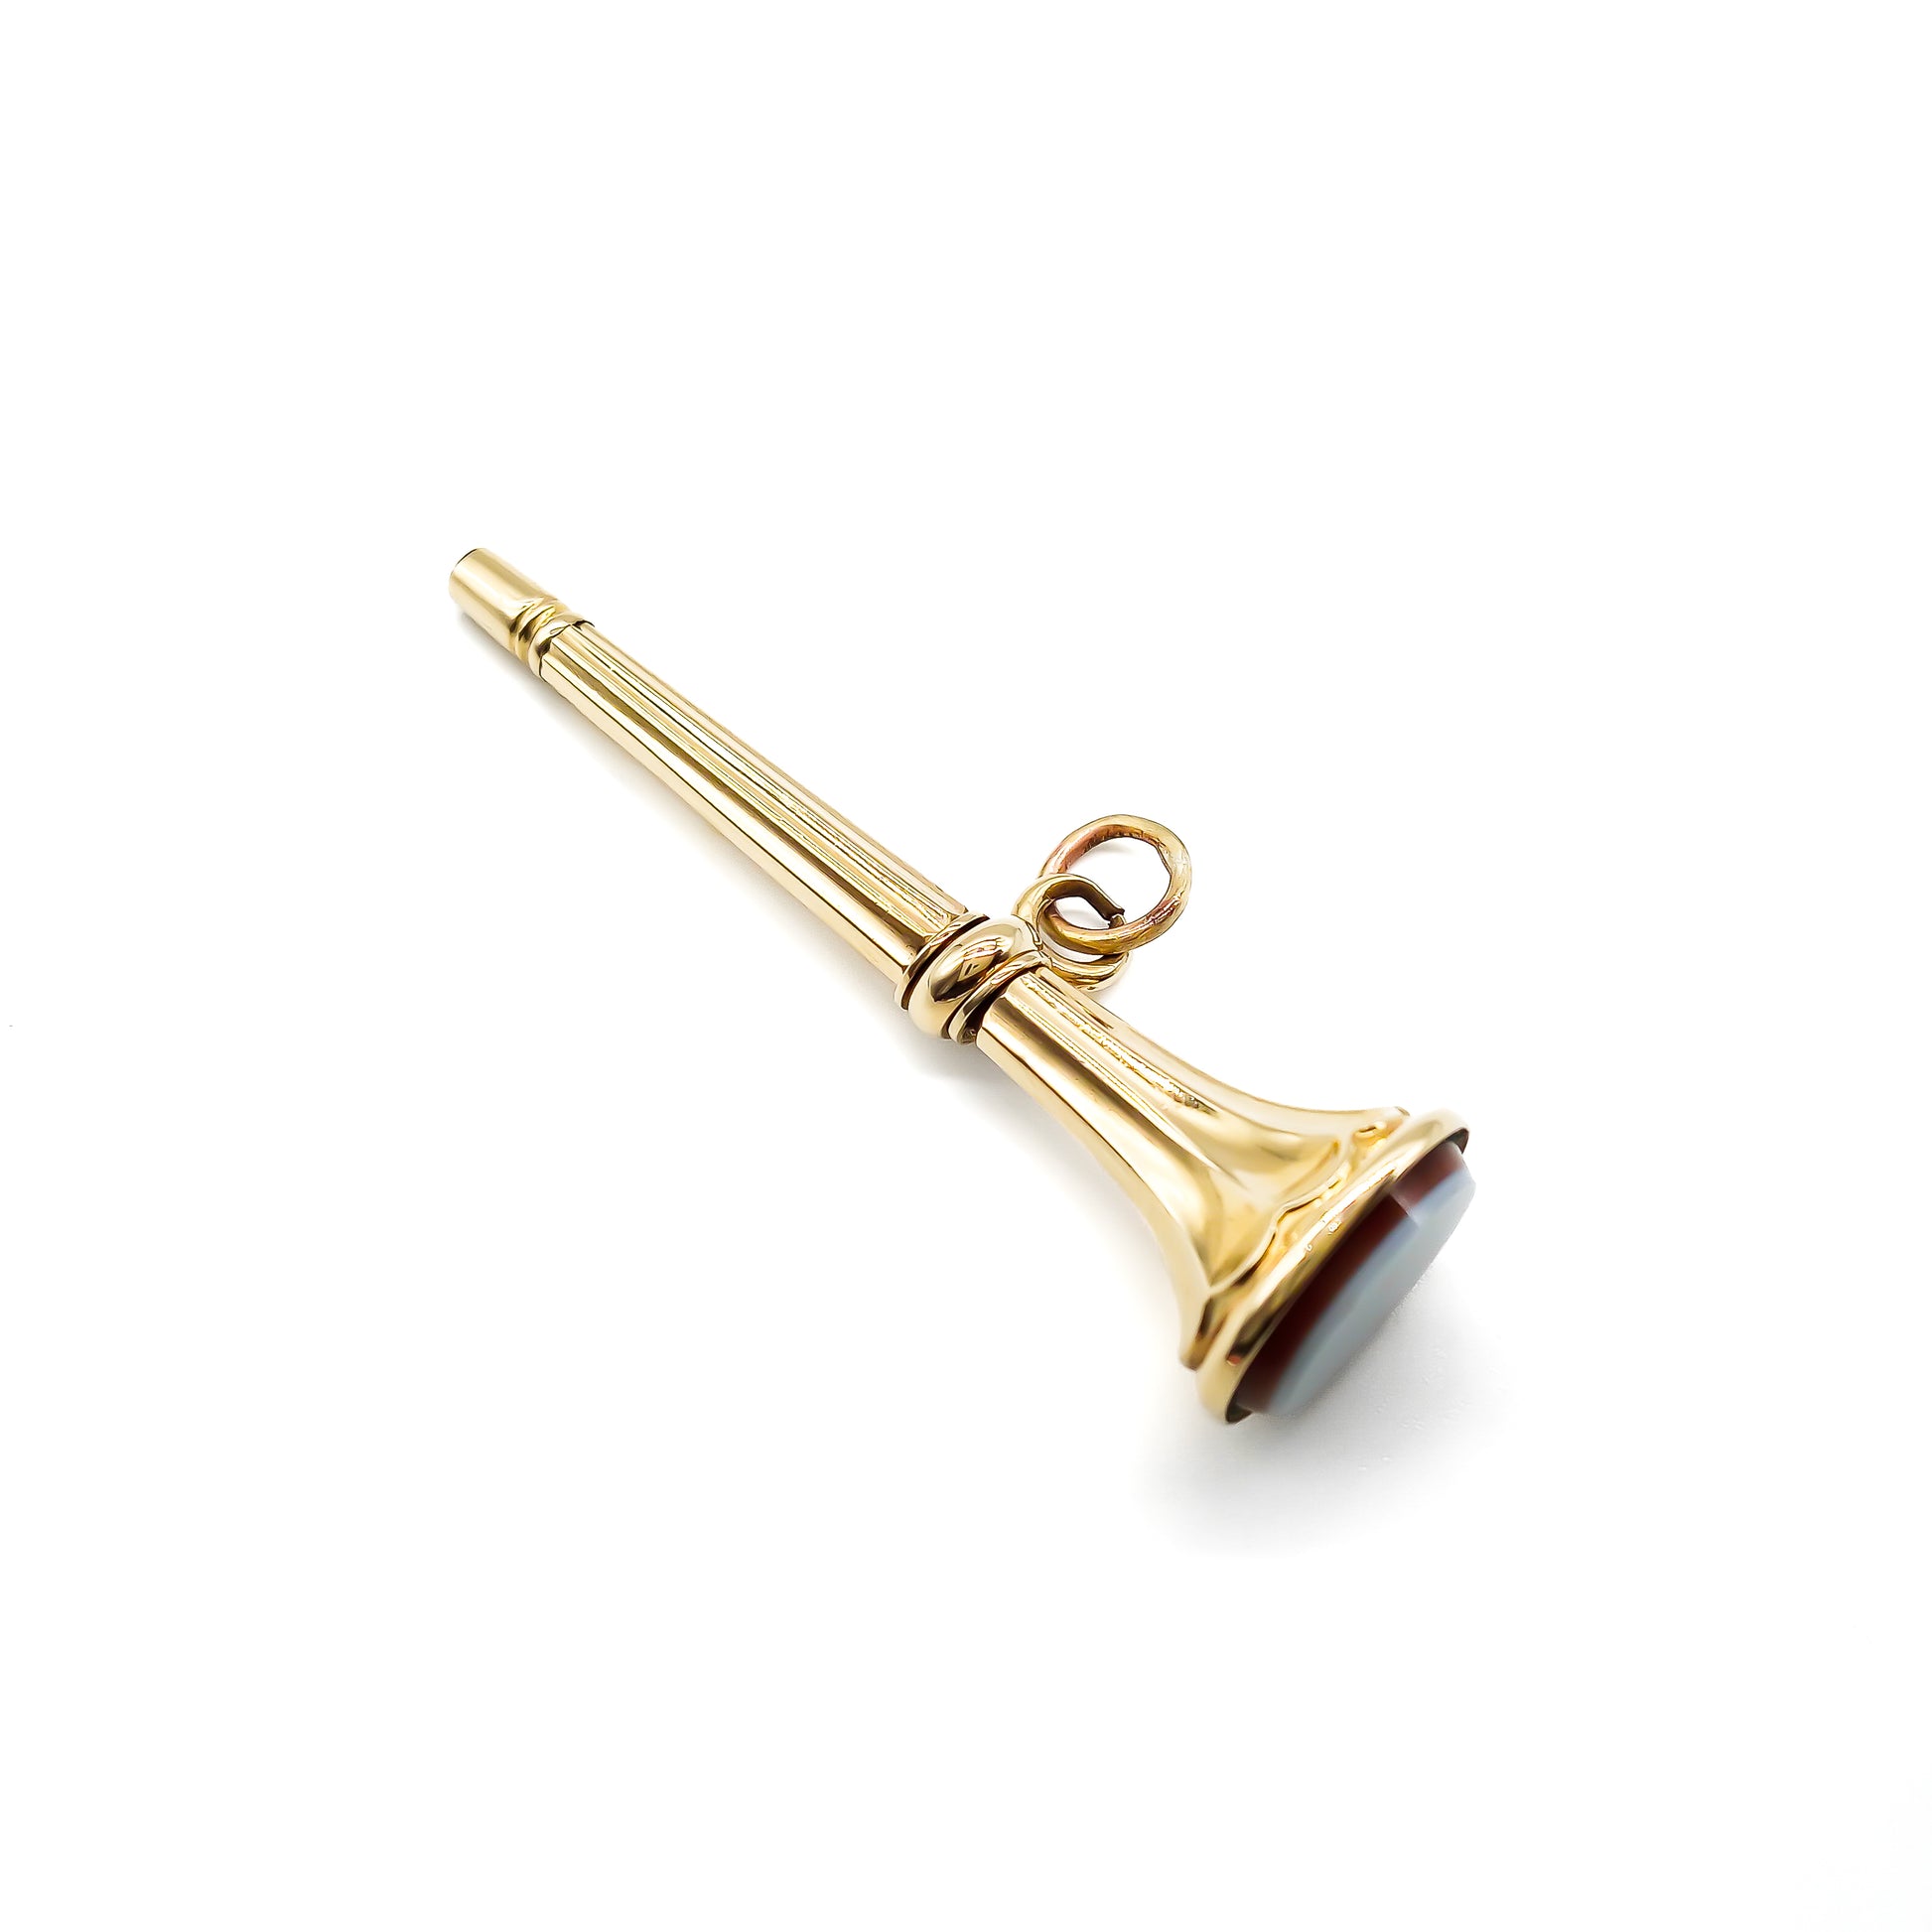 Classic Victorian 9ct gold watch key, set with a sardonyx stone. 